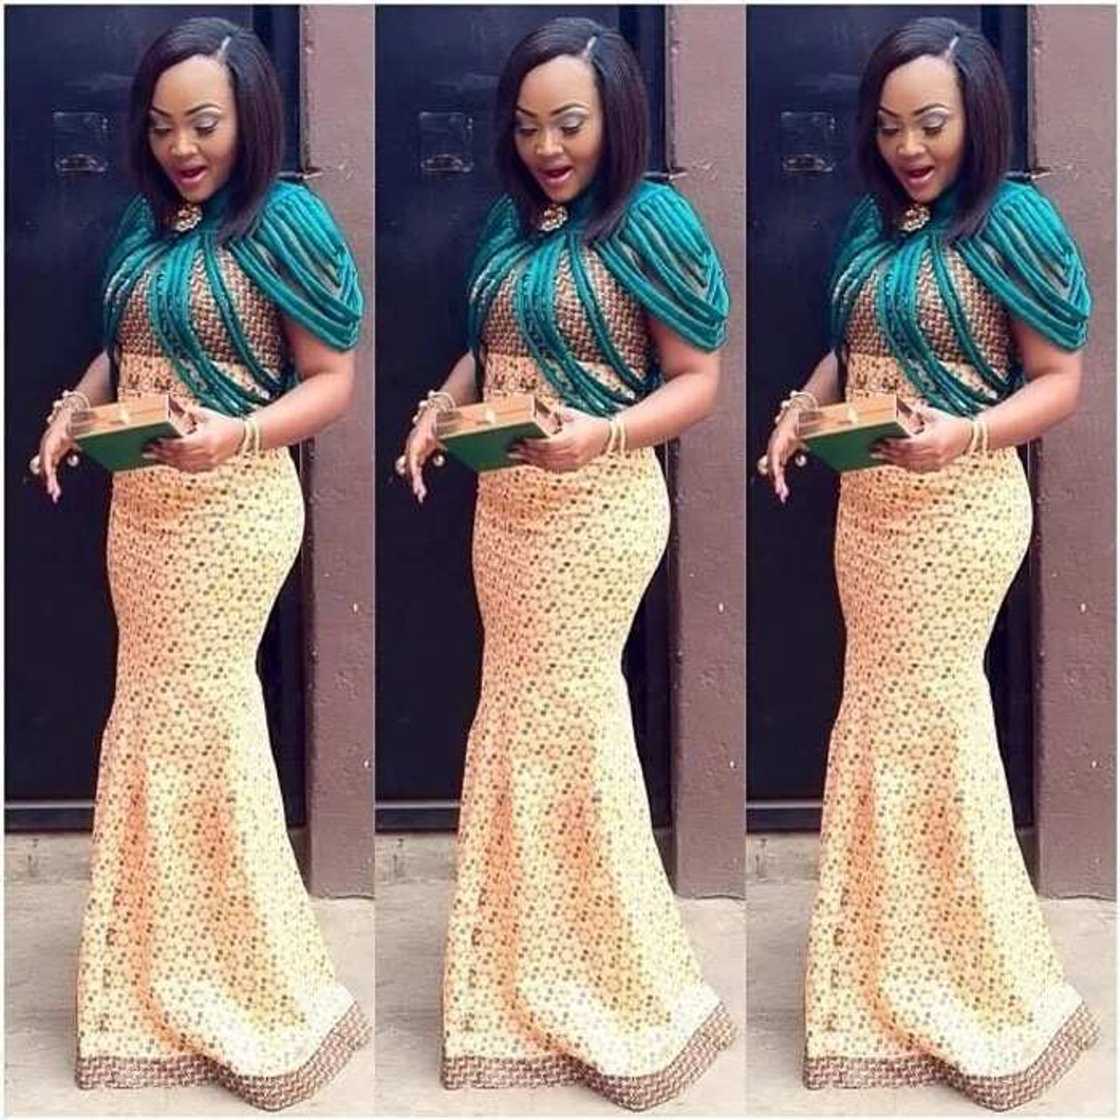 Mercy Aigbe dress